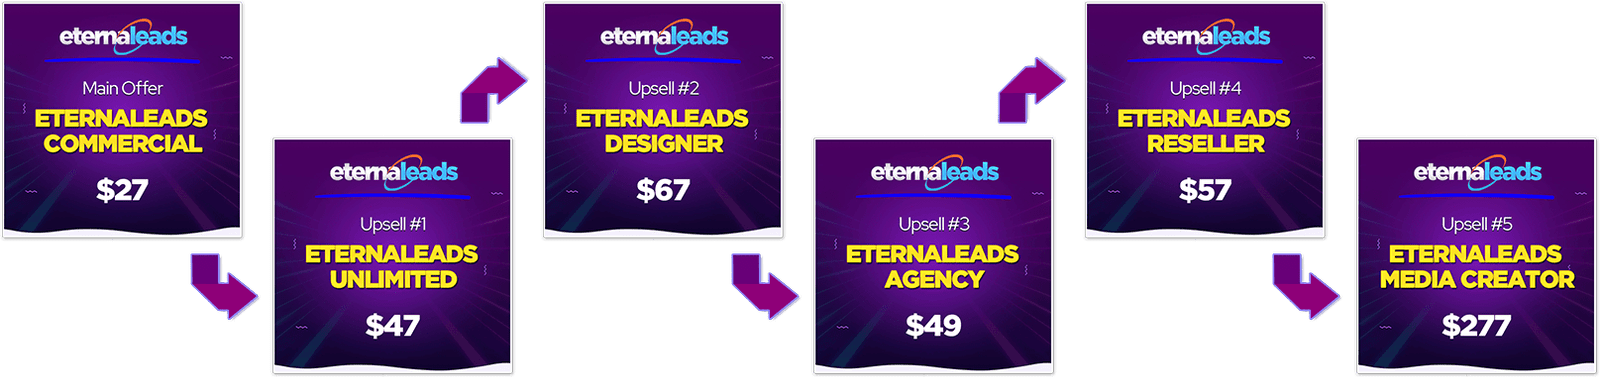 eternaleads sales funnel details